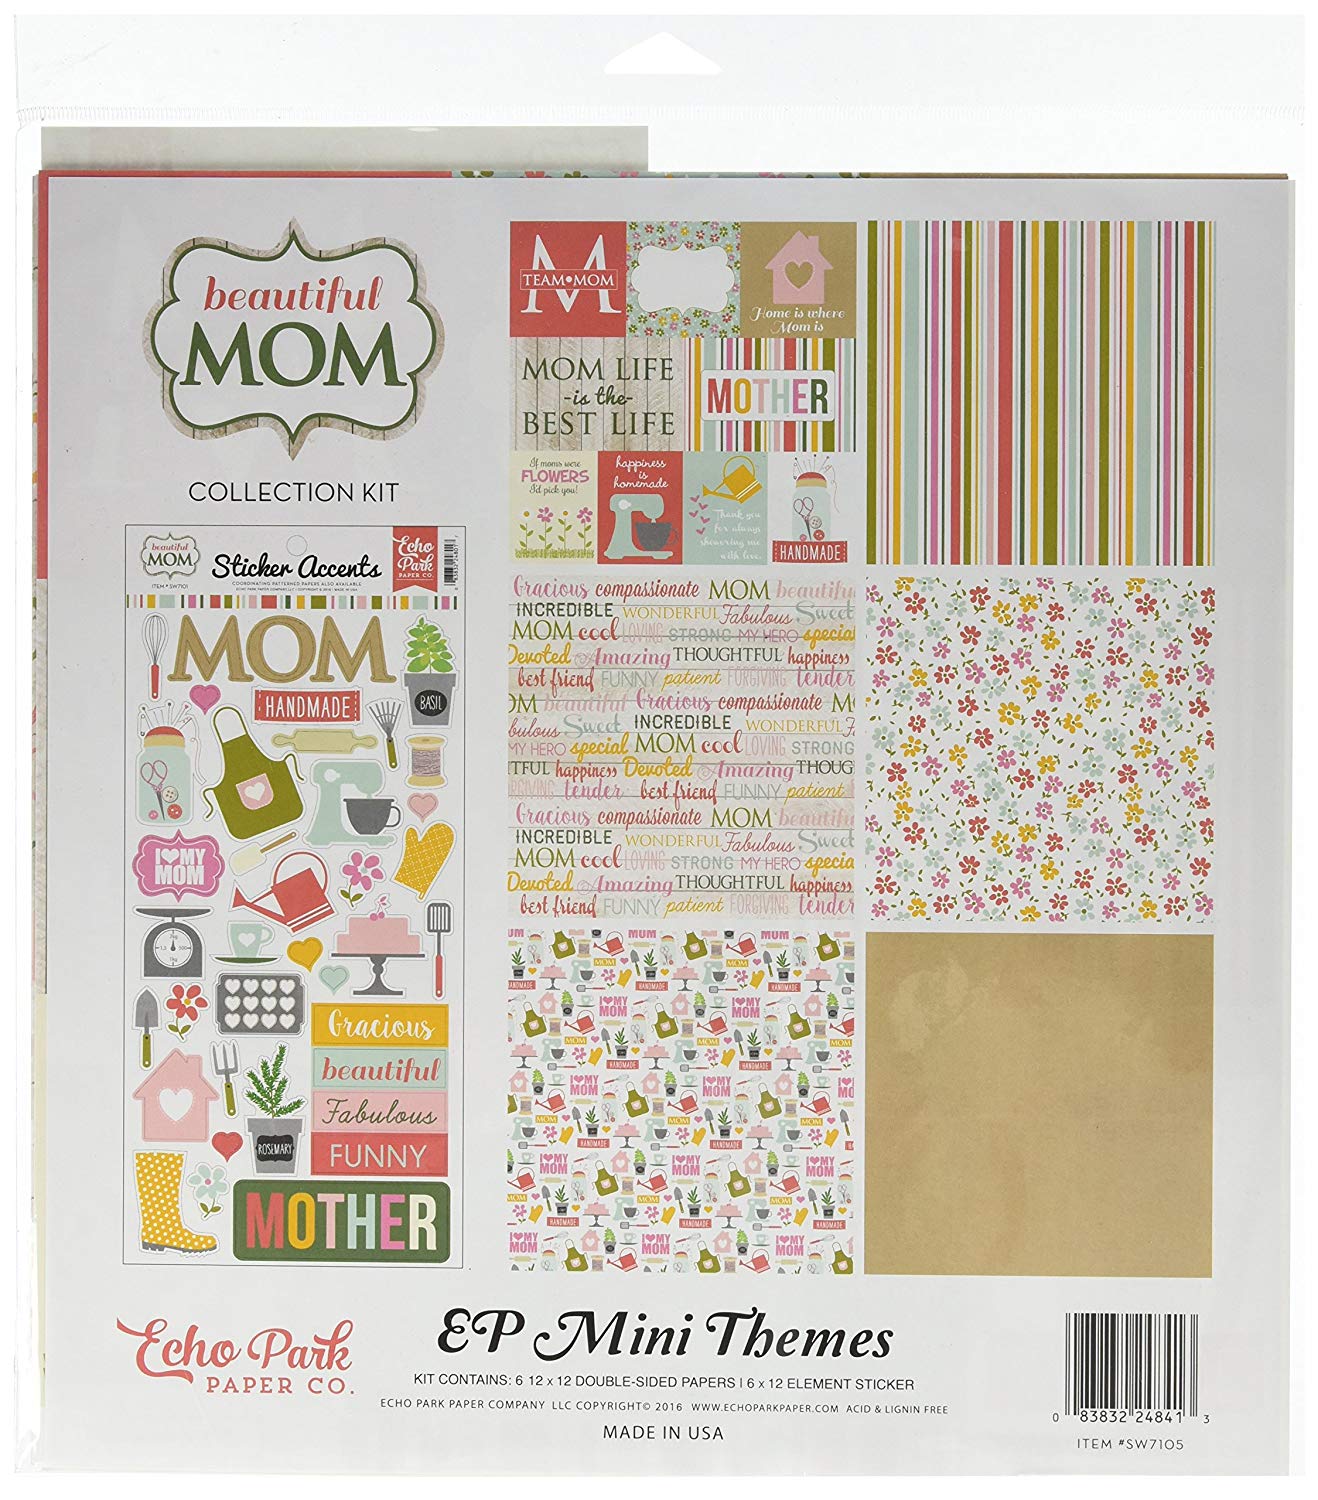 Beautiful Mom 12x12 Scrapbook Collection Kit